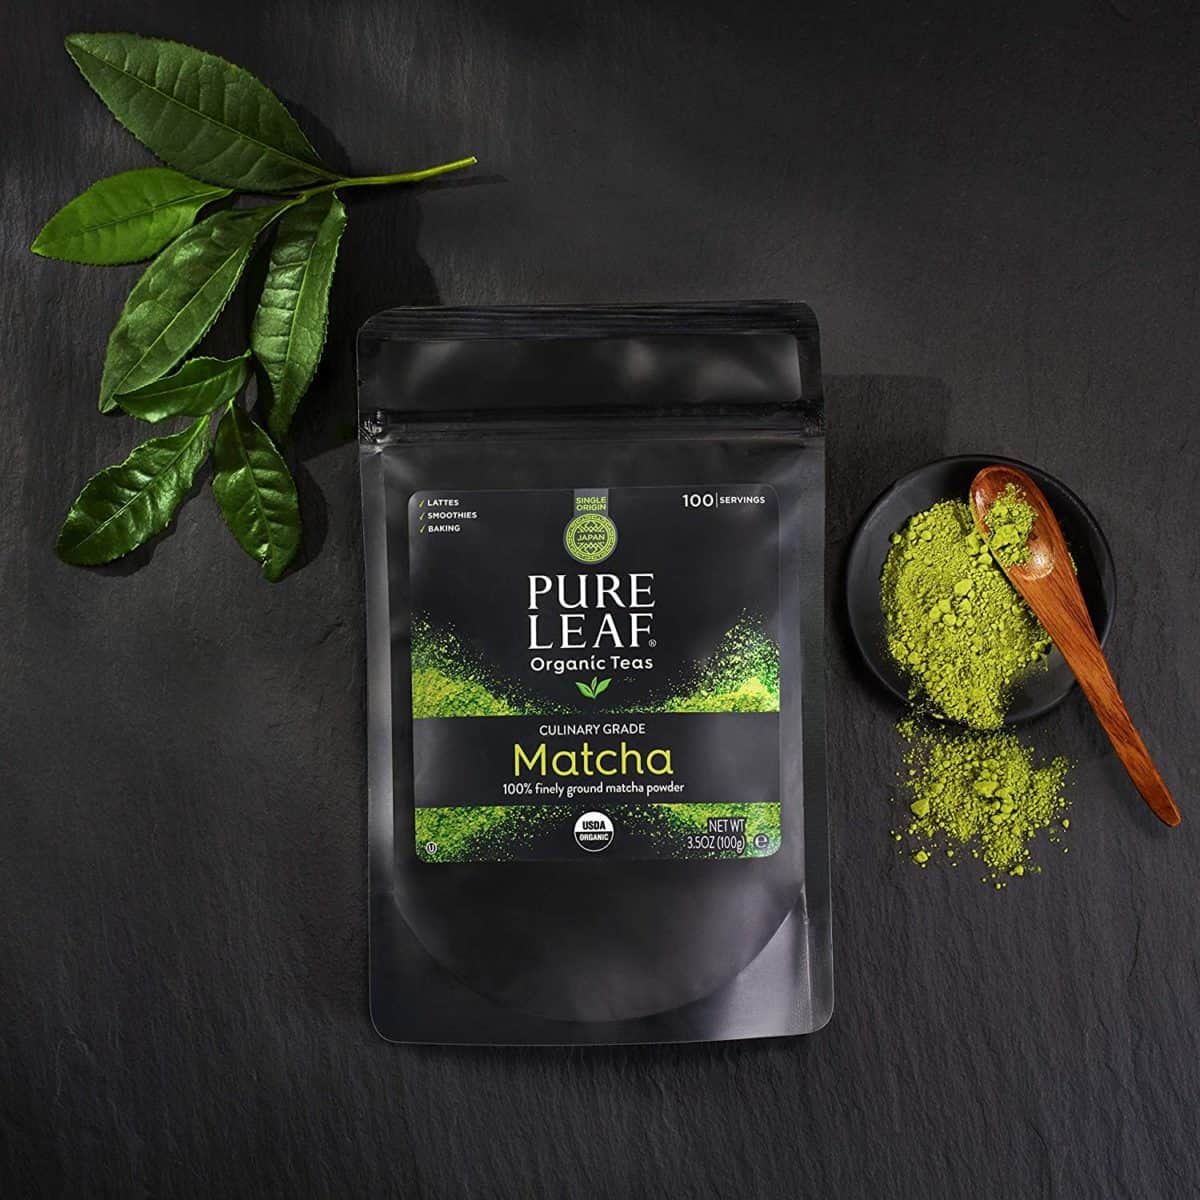 Pure leaf match green tea powder one of the best matcha brands